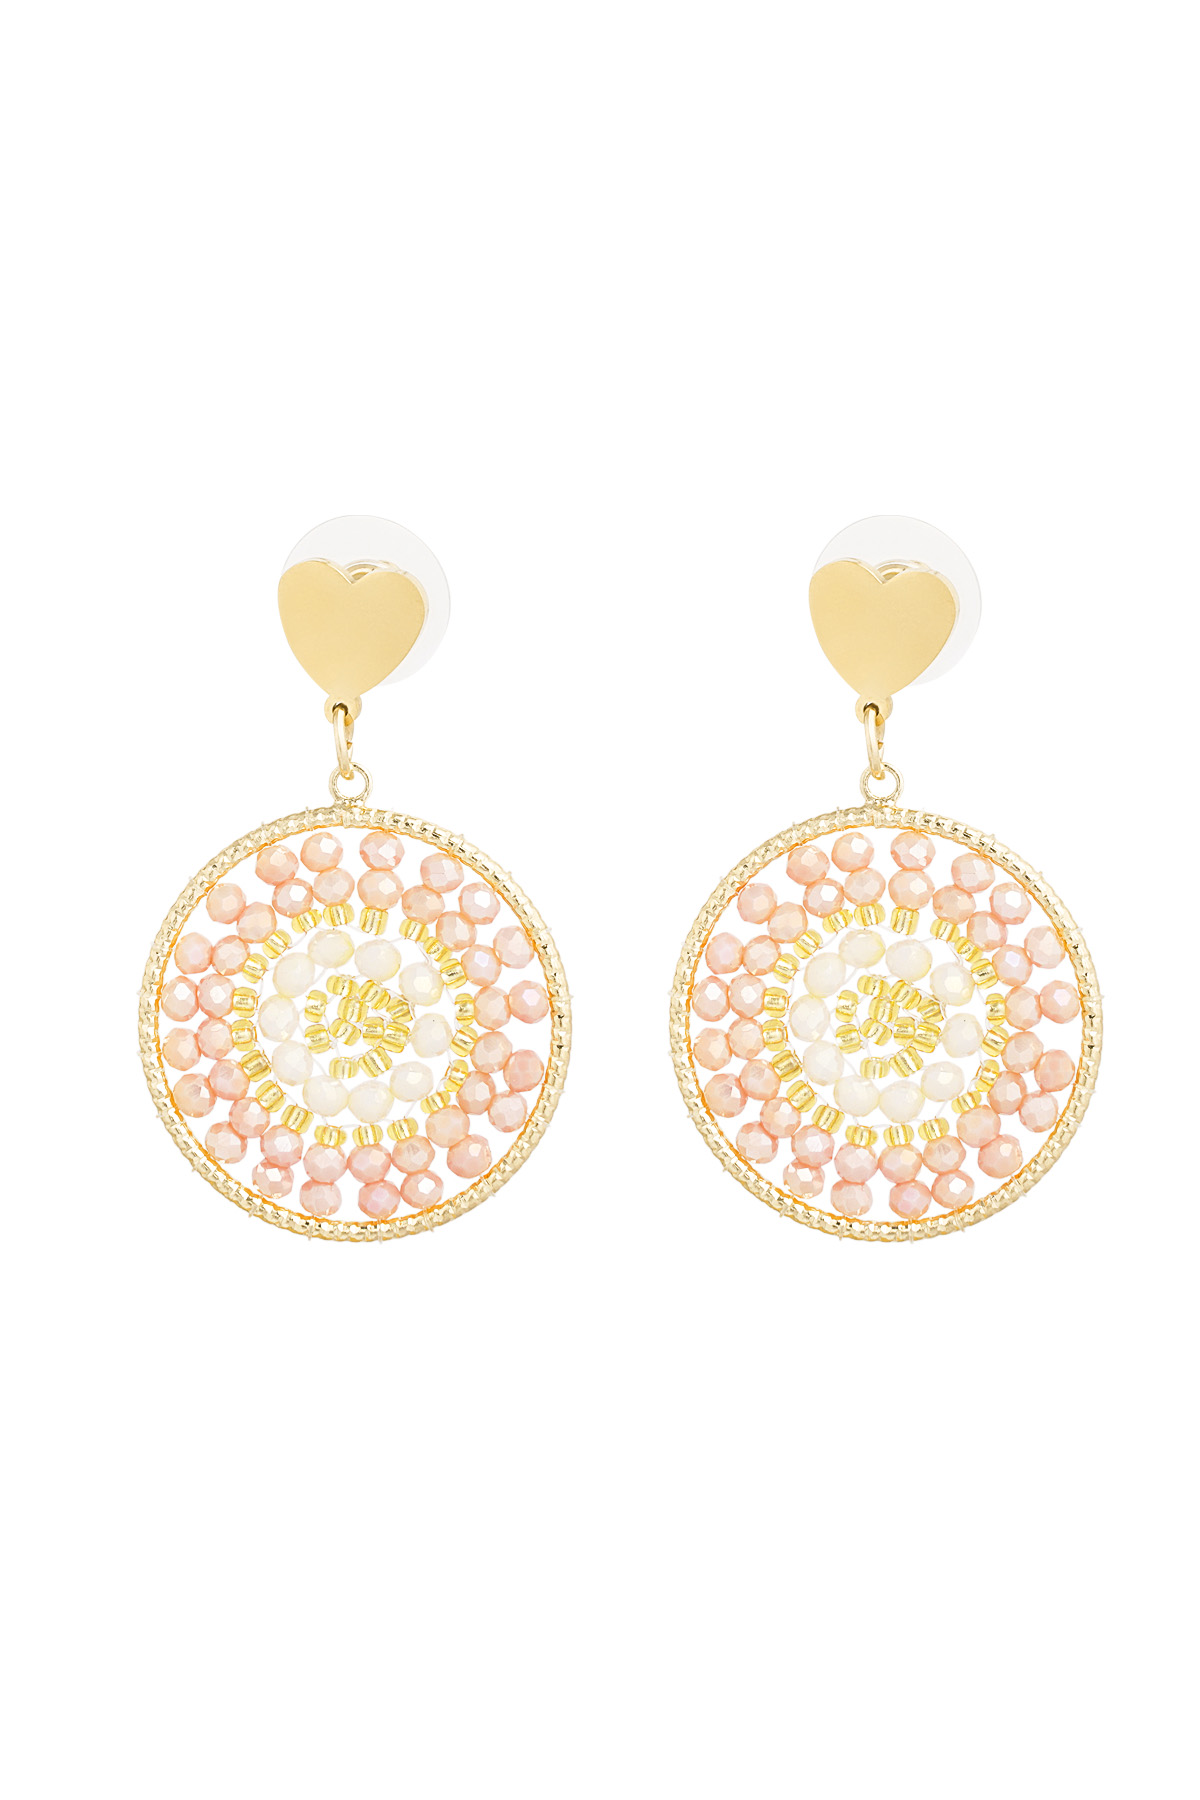 Mandala earrings with heart - coral 